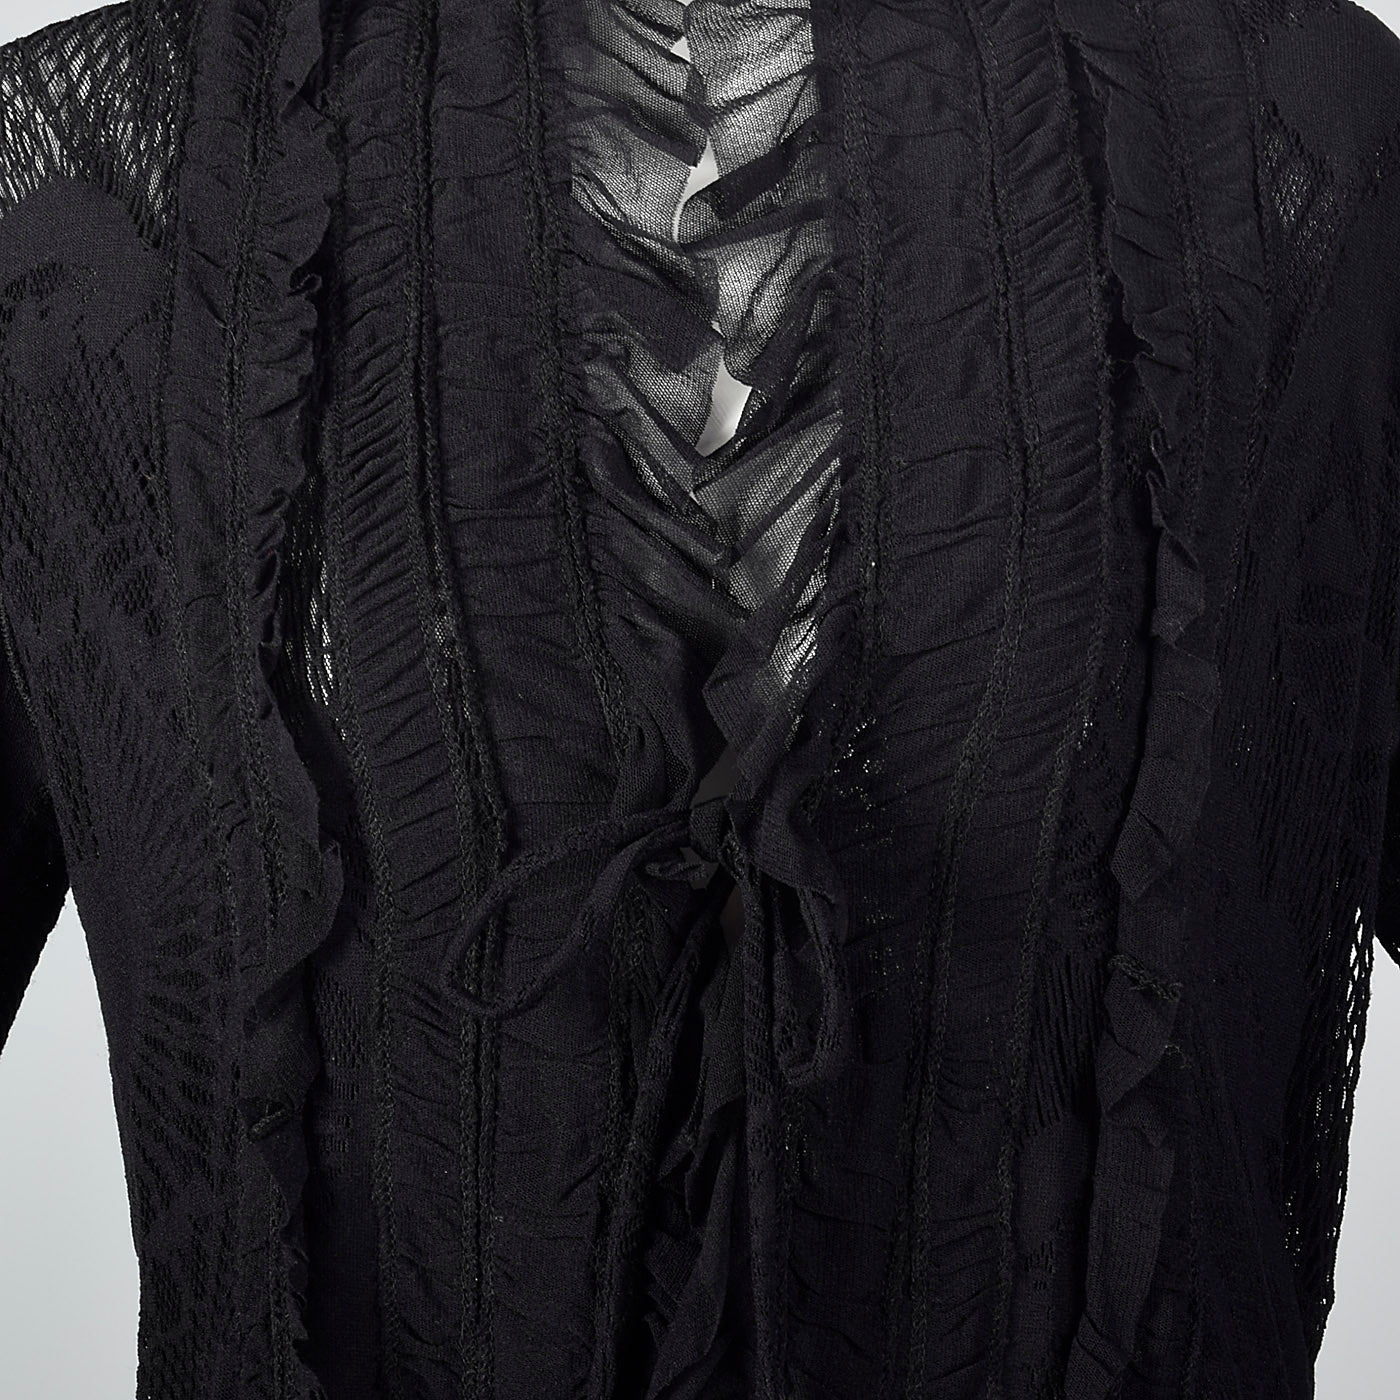 1990s Jean Paul Gaultier Soleil Black Lace and Mesh Jacket